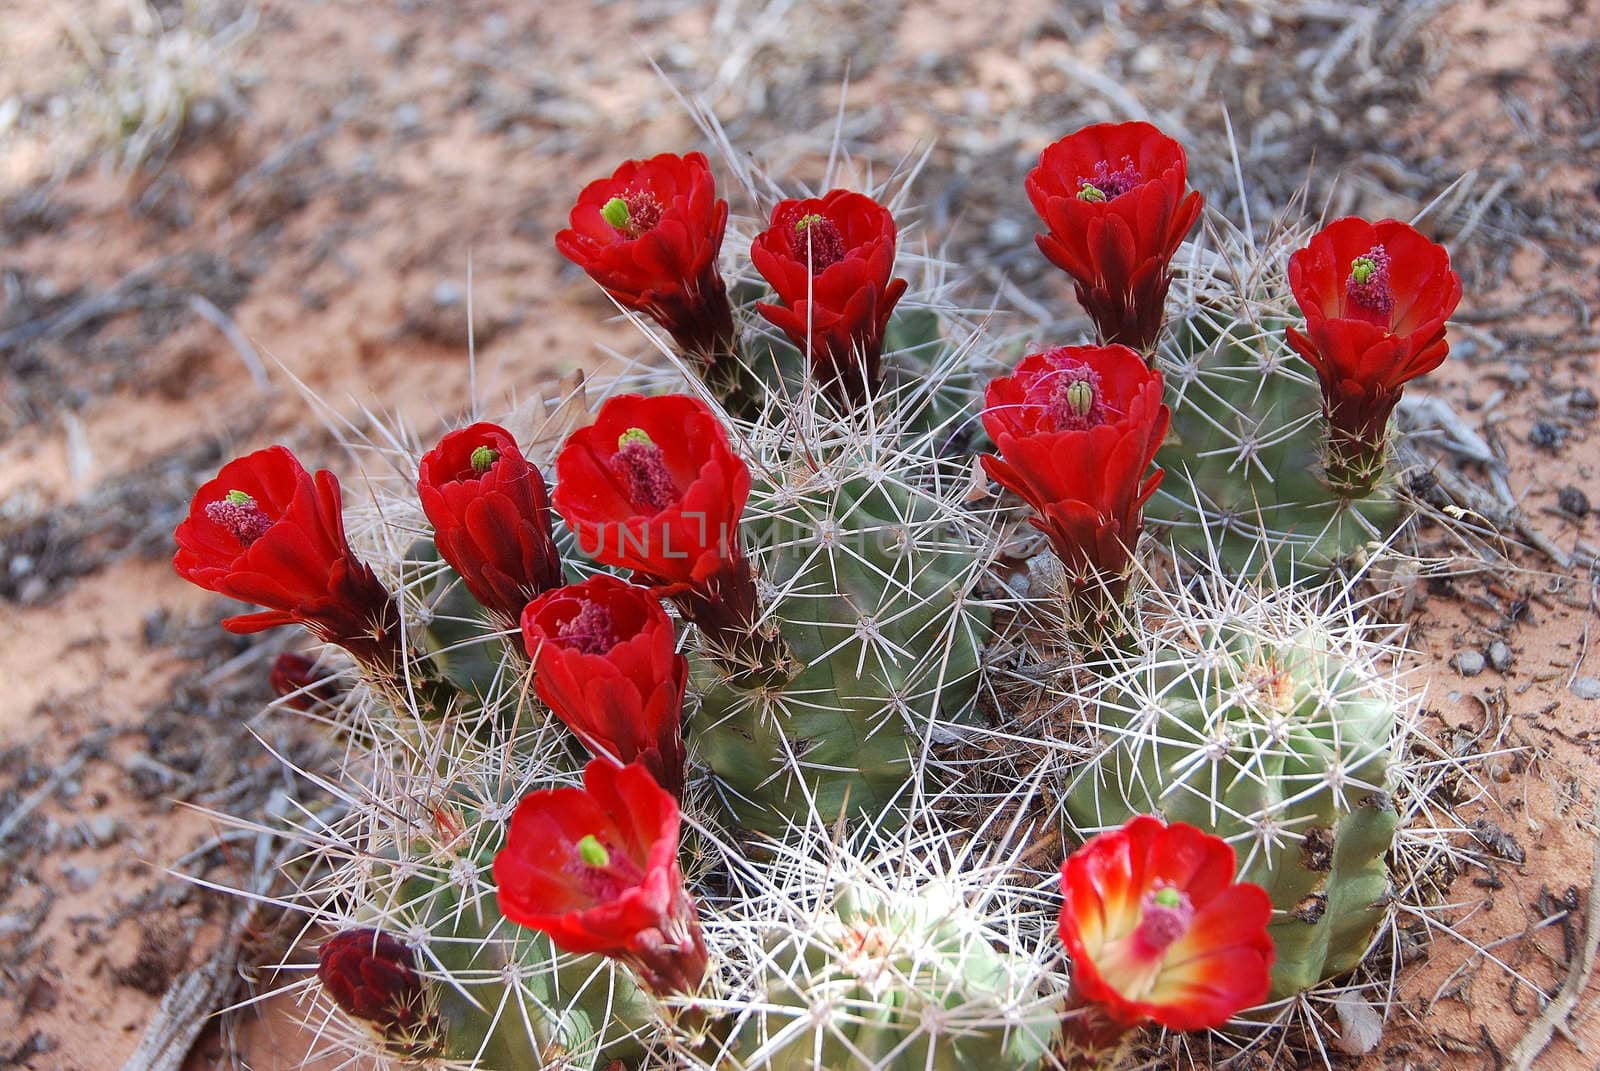 Cactus blooming in the desert